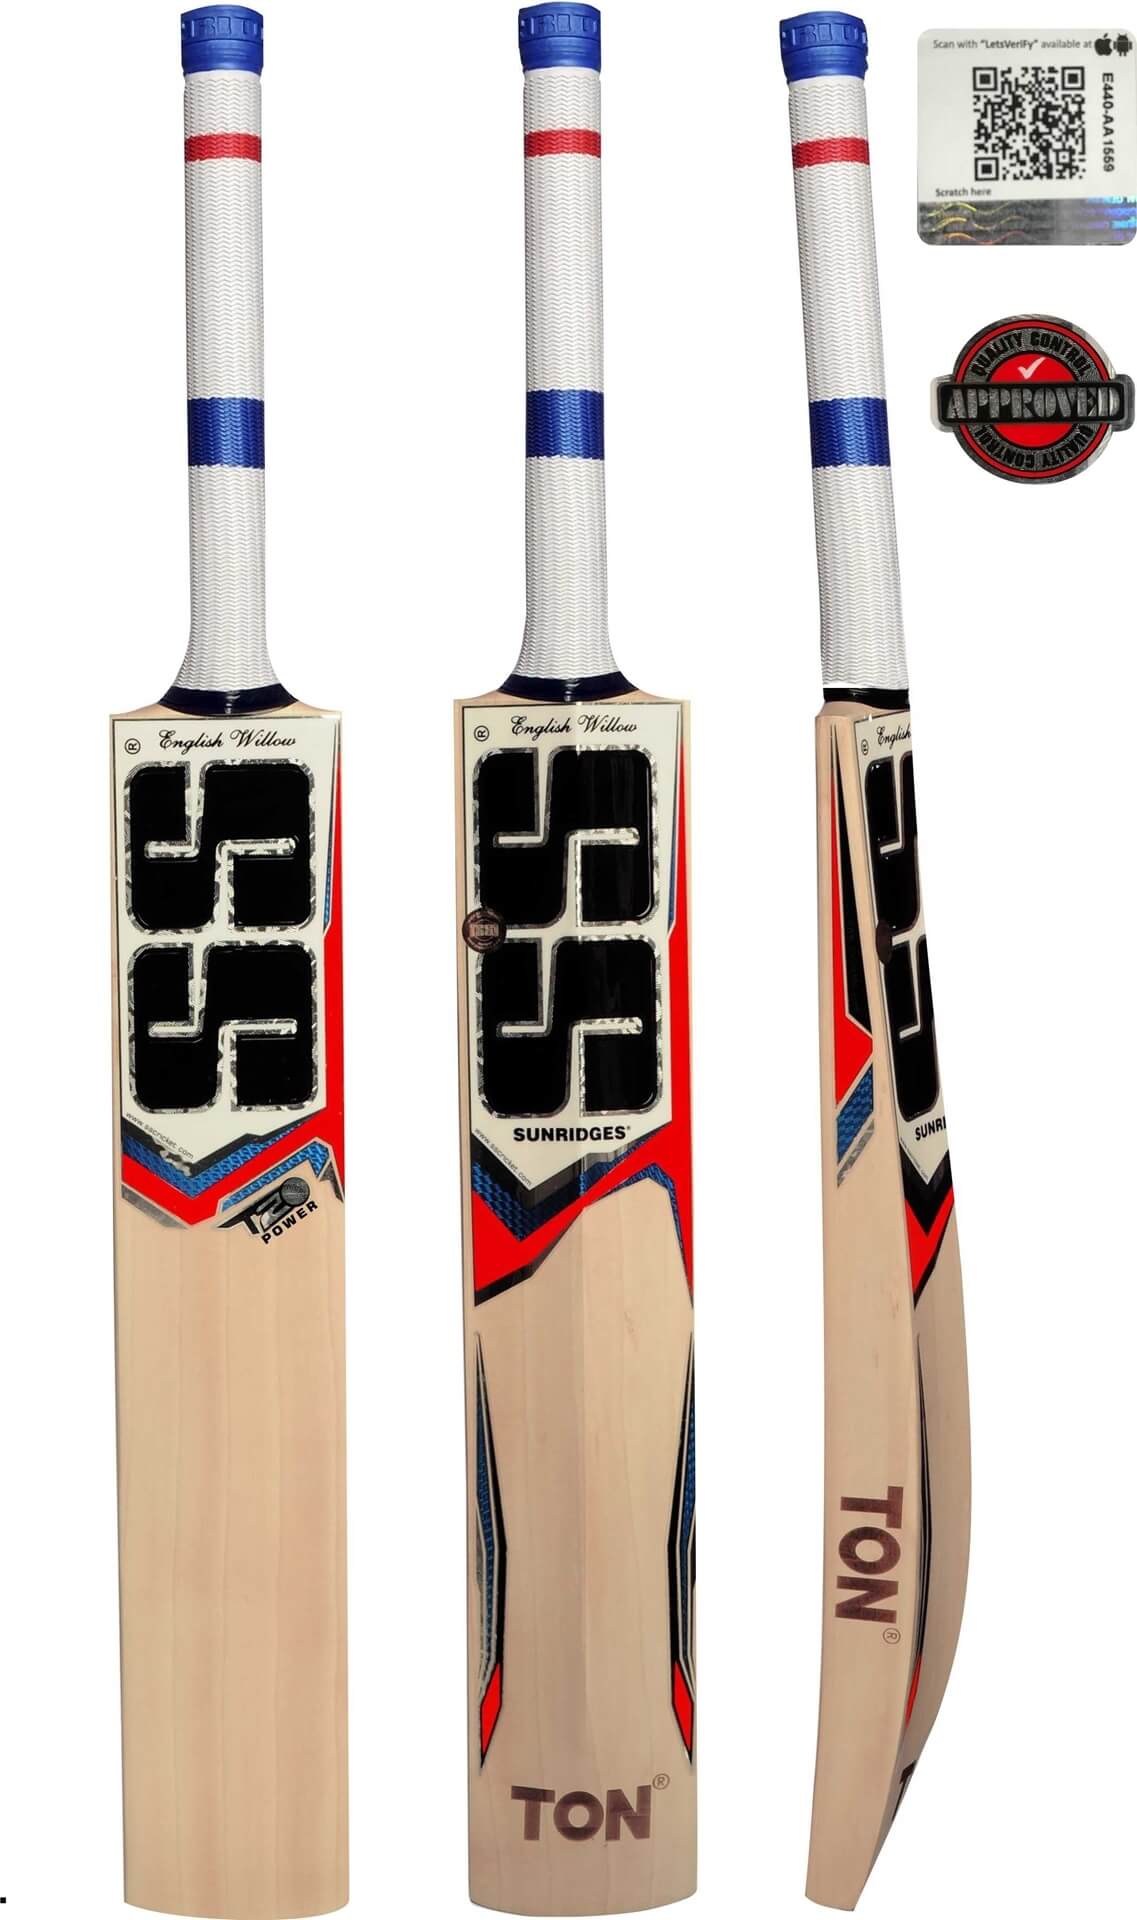 SS T20 Power English Willow Cricket Bat by Sunridges Price 175.00 Shop